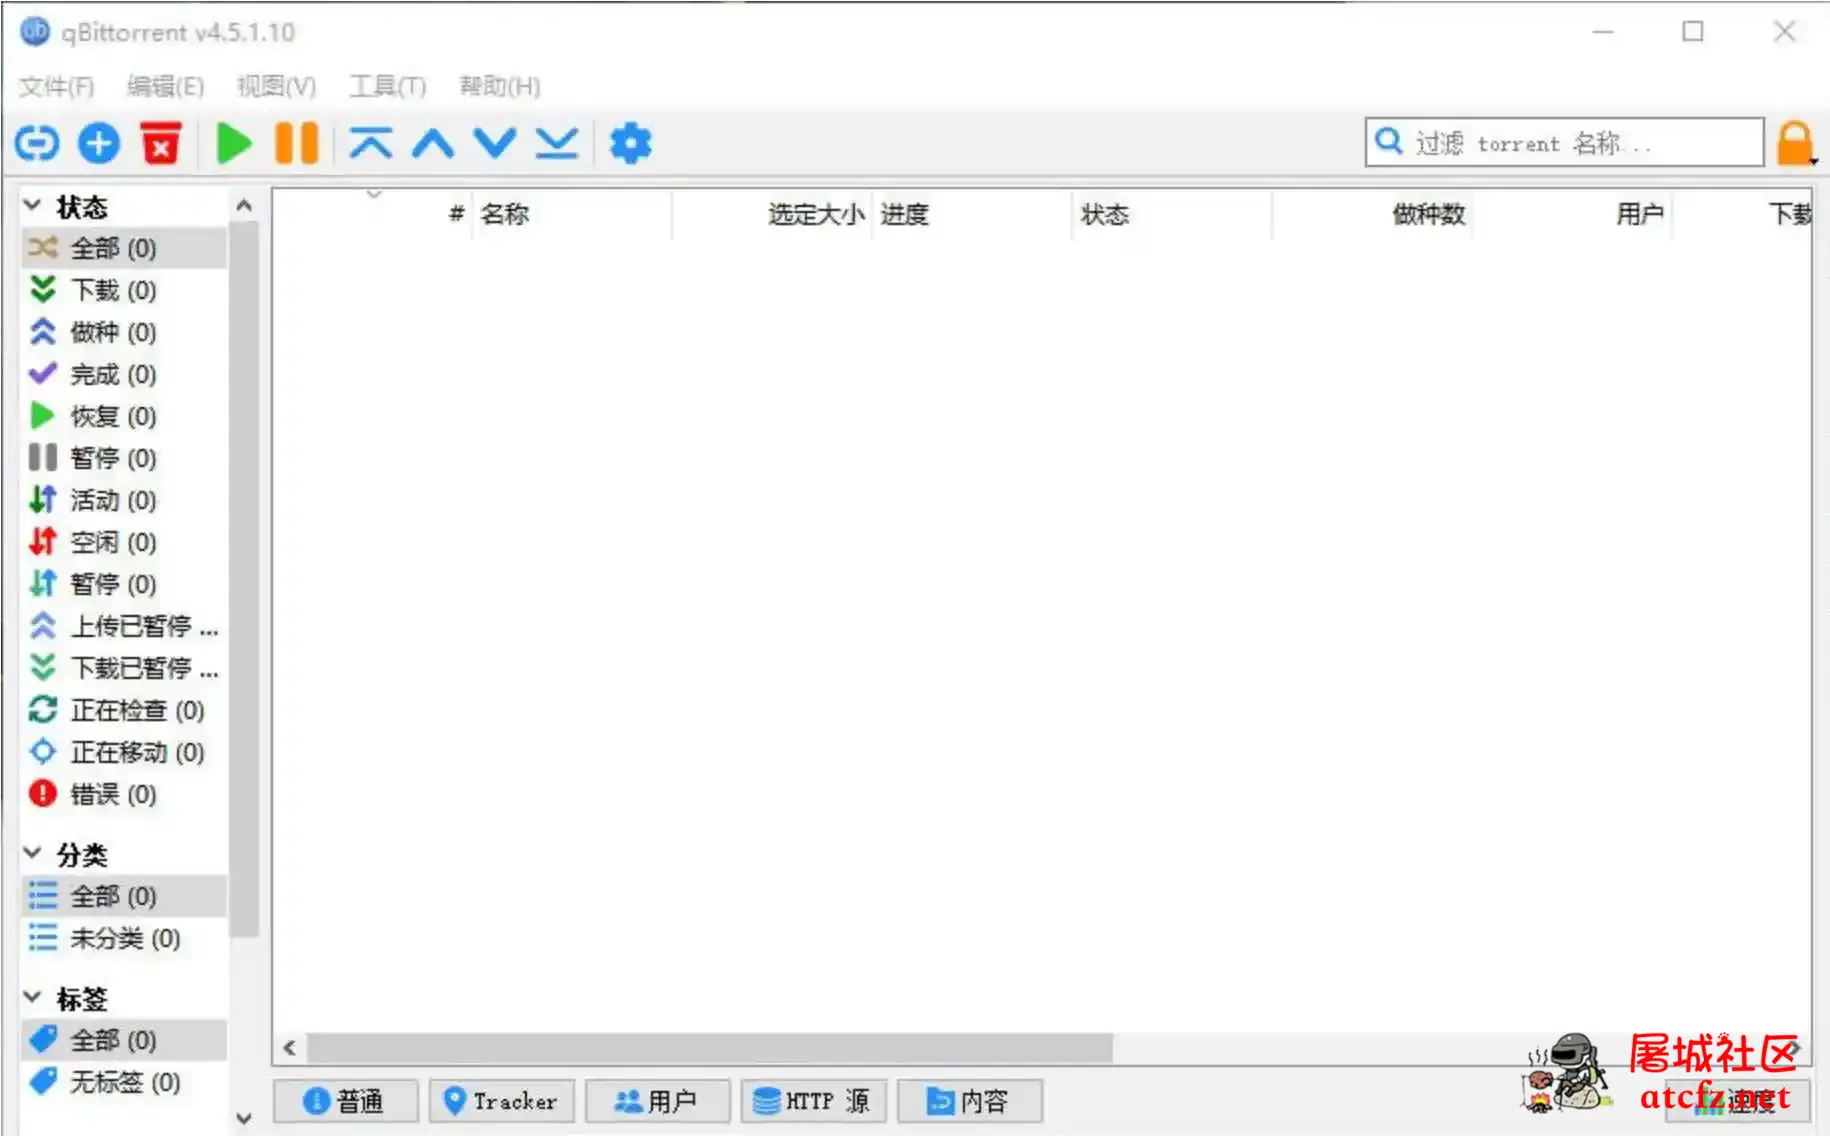 qBittorrent v4.5.3.10增强便携版BT种子下载工具 屠城辅助网www.tcfz1.com4134